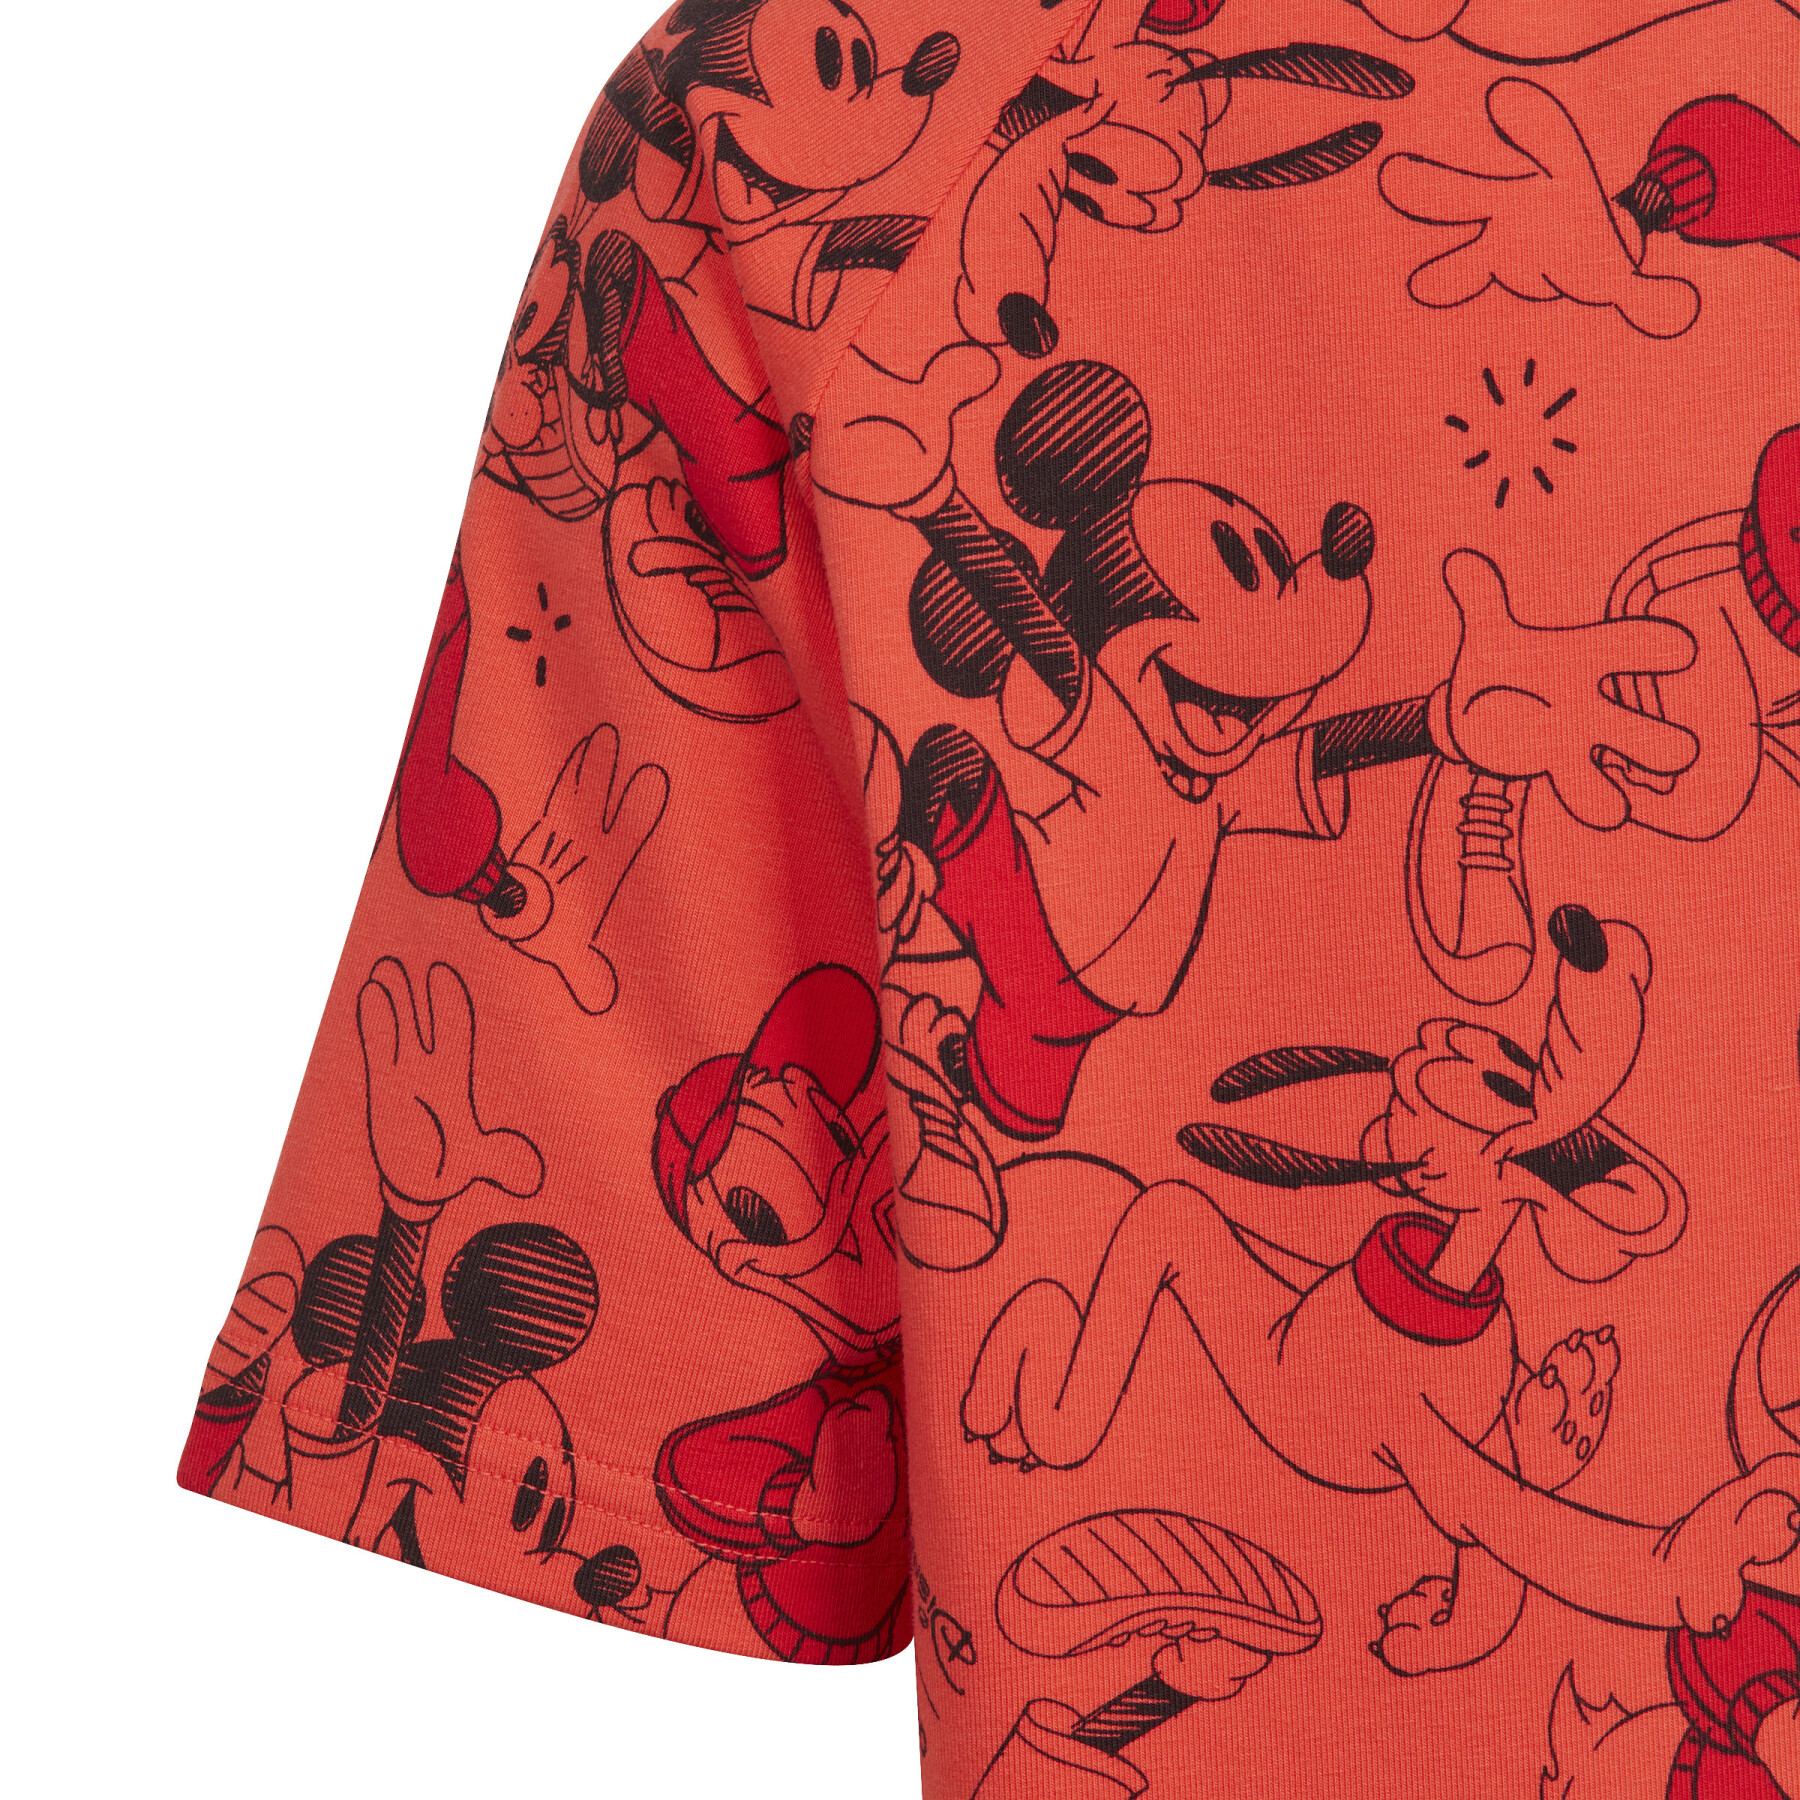 T-Shirt, Baby adidas Disney Mickey Mouse